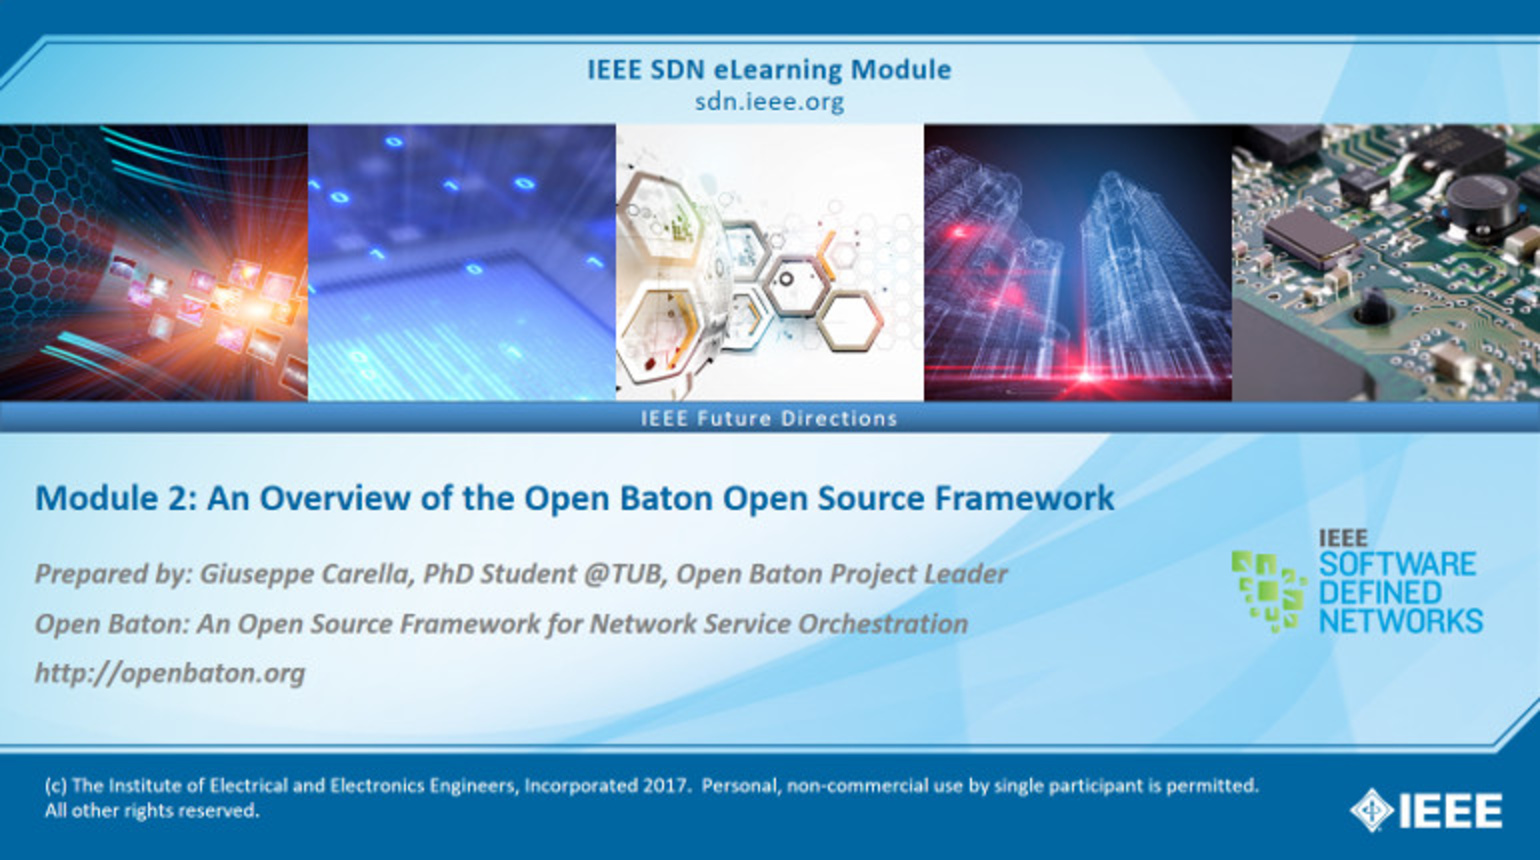 IEEE SDN: Open Baton Module 2 - An Overview of the Open Baton Open Source Framework